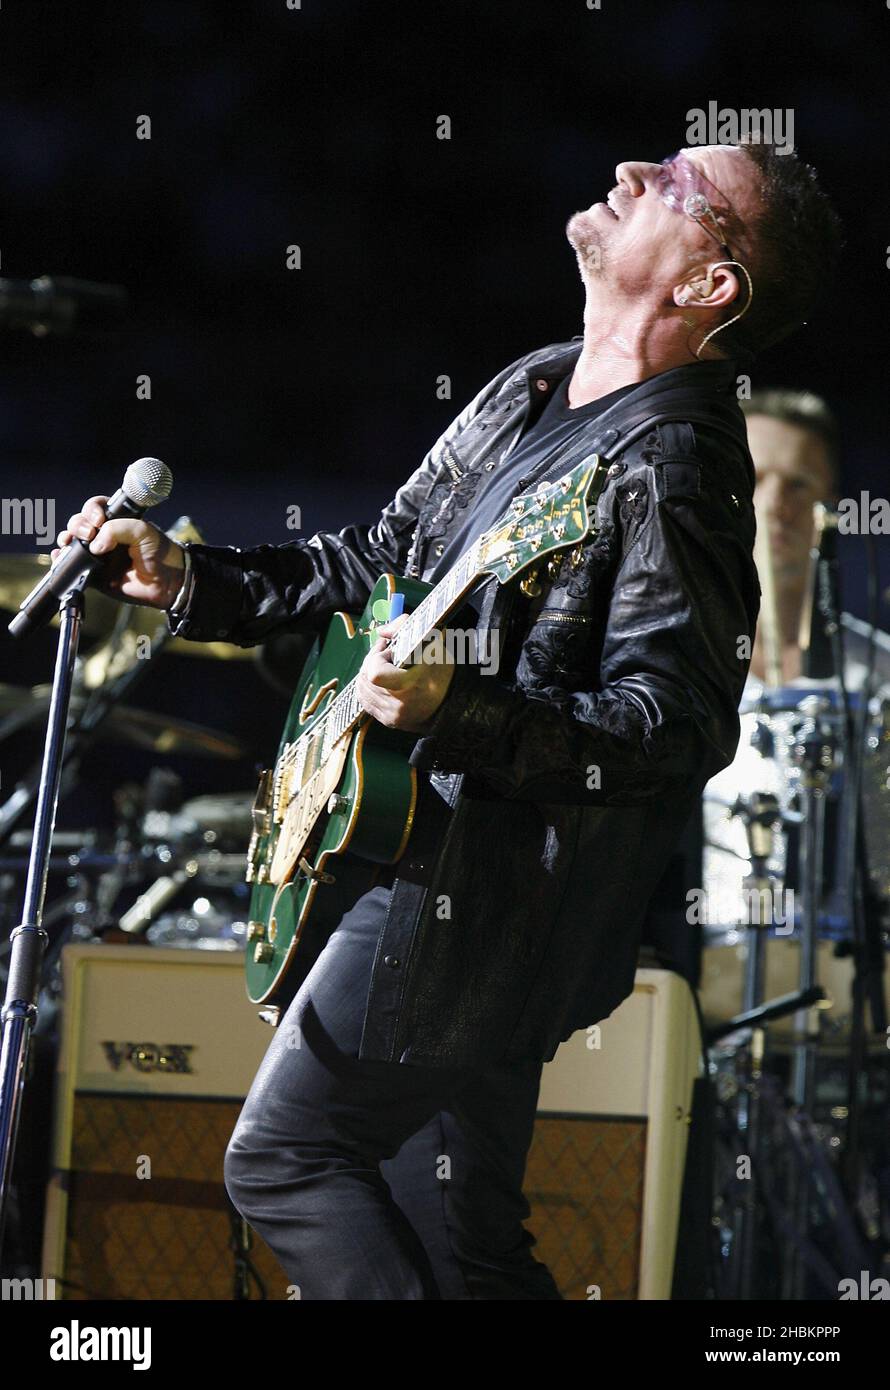 Bono of U2 performs at Wembley Stadium in London, UK Stock Photo